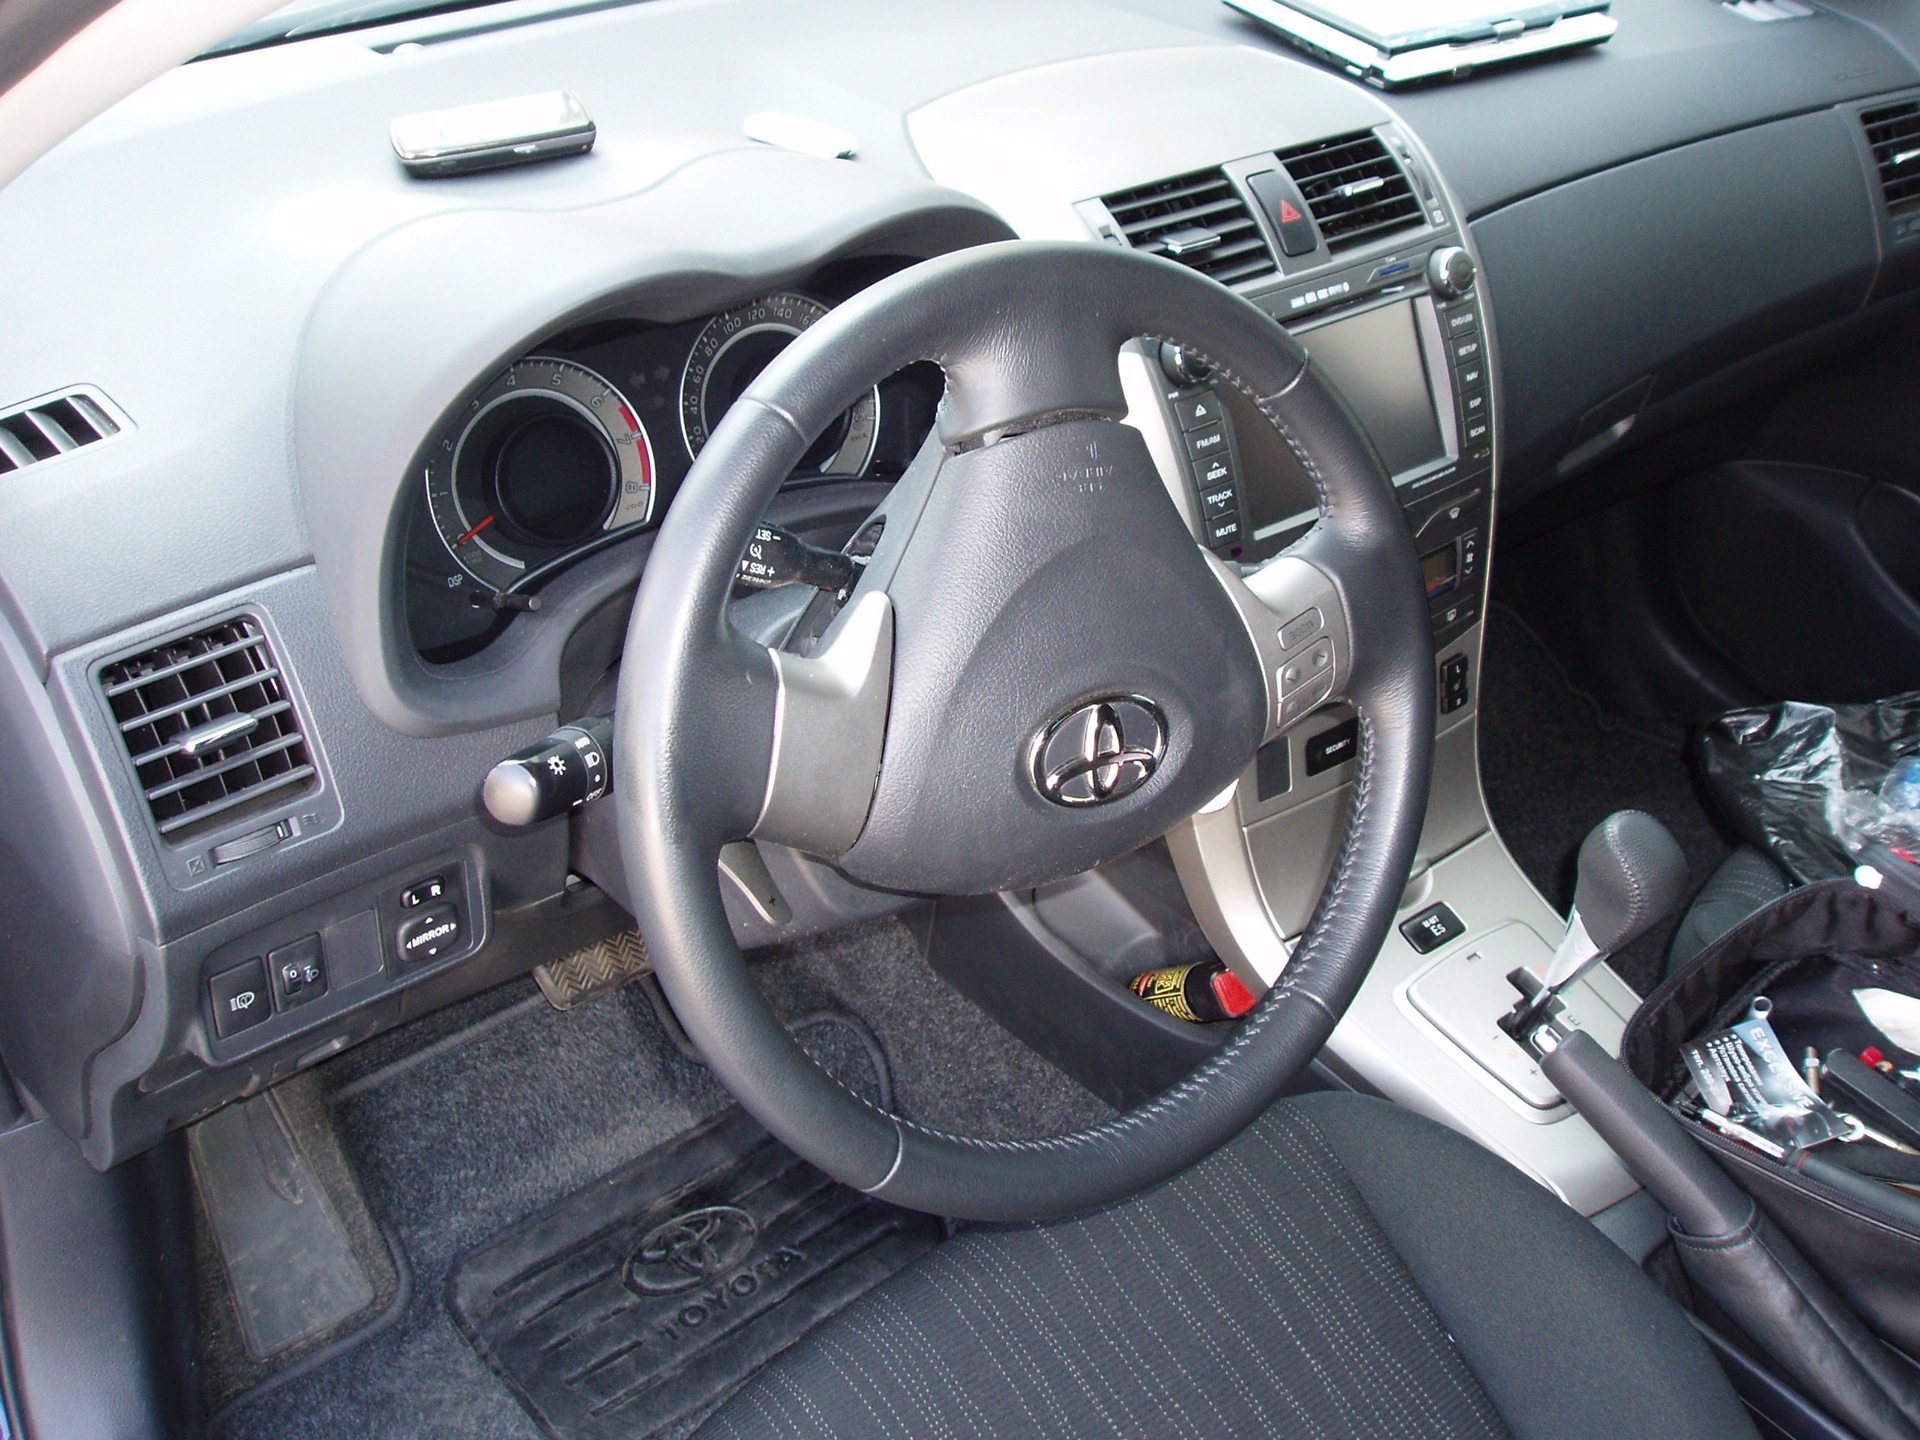   Bluetooth Toyota Corolla 16 2008 